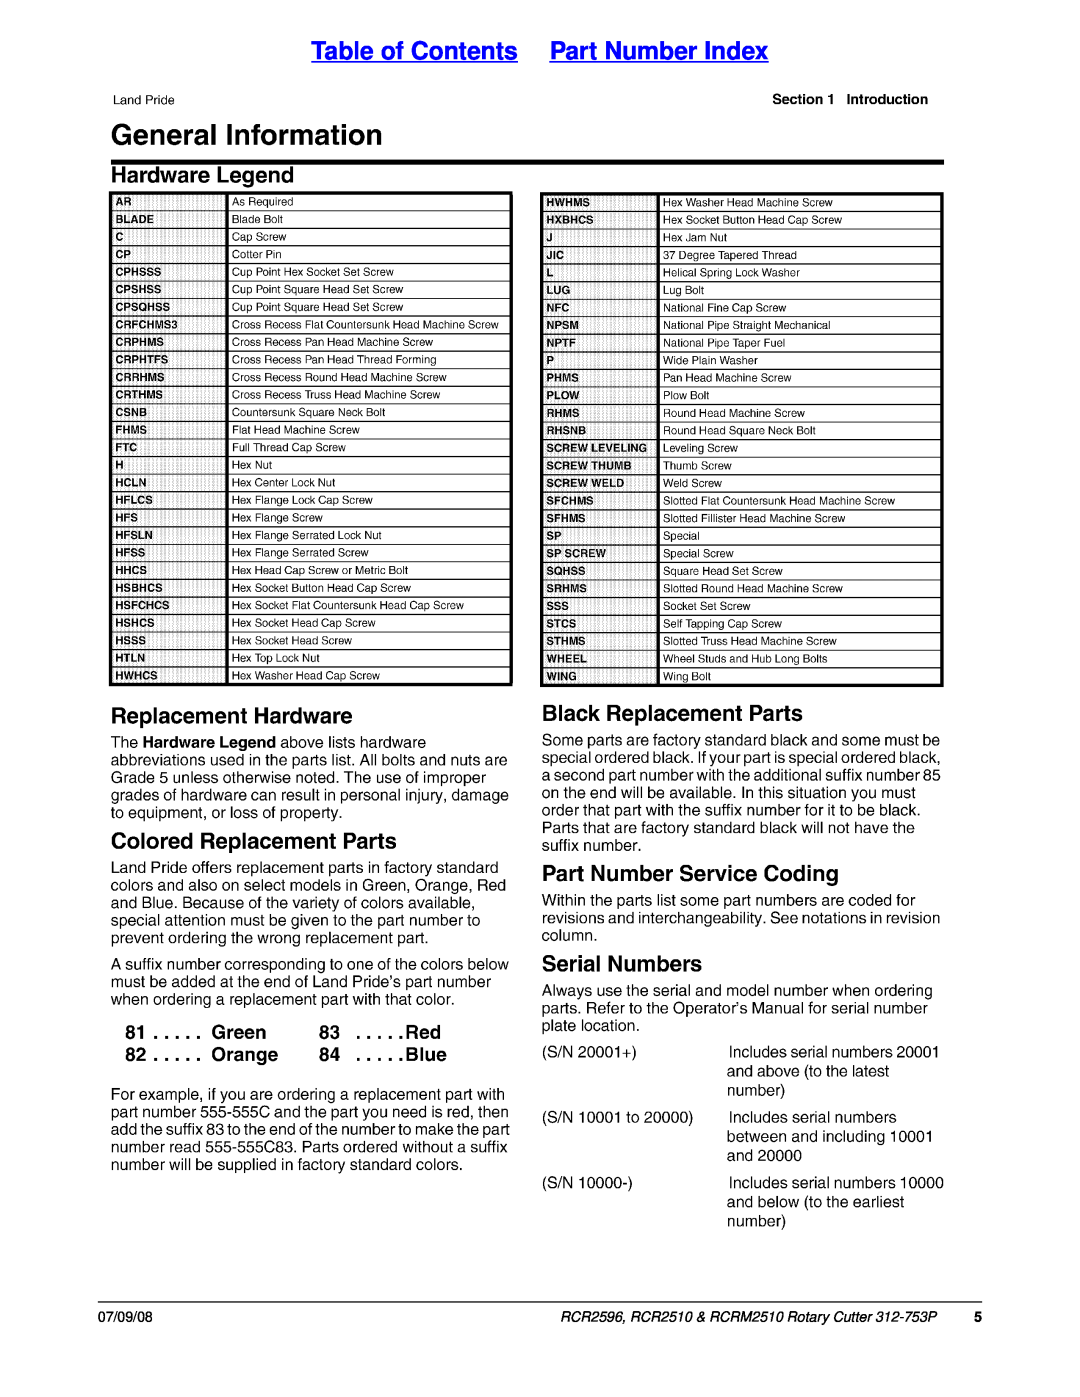 Land Pride RCR2510, RCR2596, RCRM2510 manual Table of Contents Part Number Index, 07/09/08 